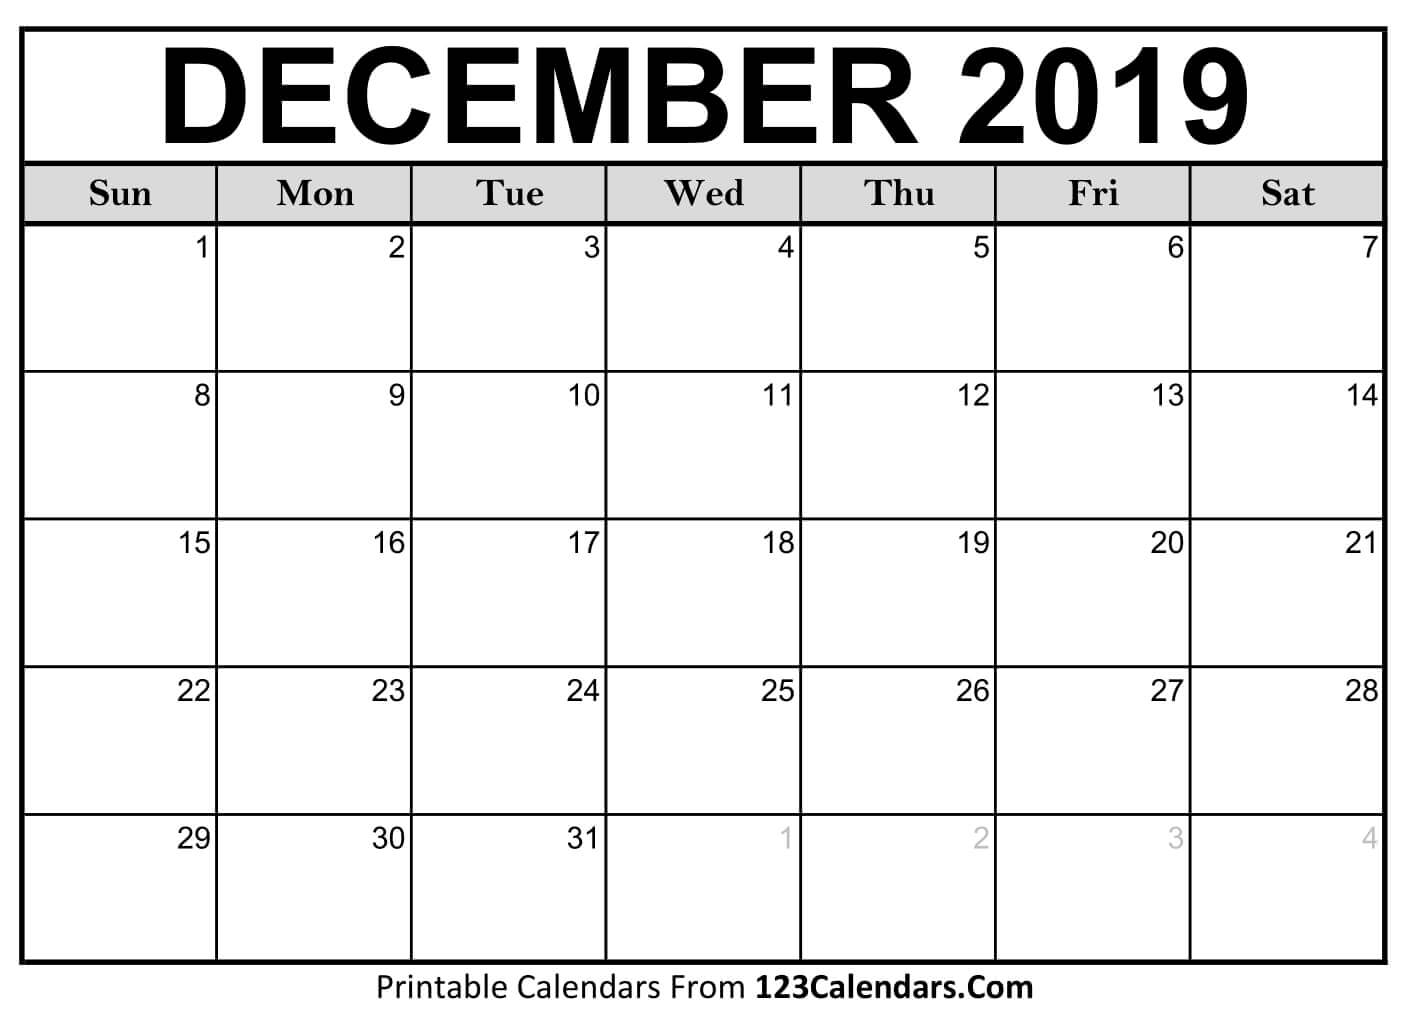 Dec 2019 Calendar Printable